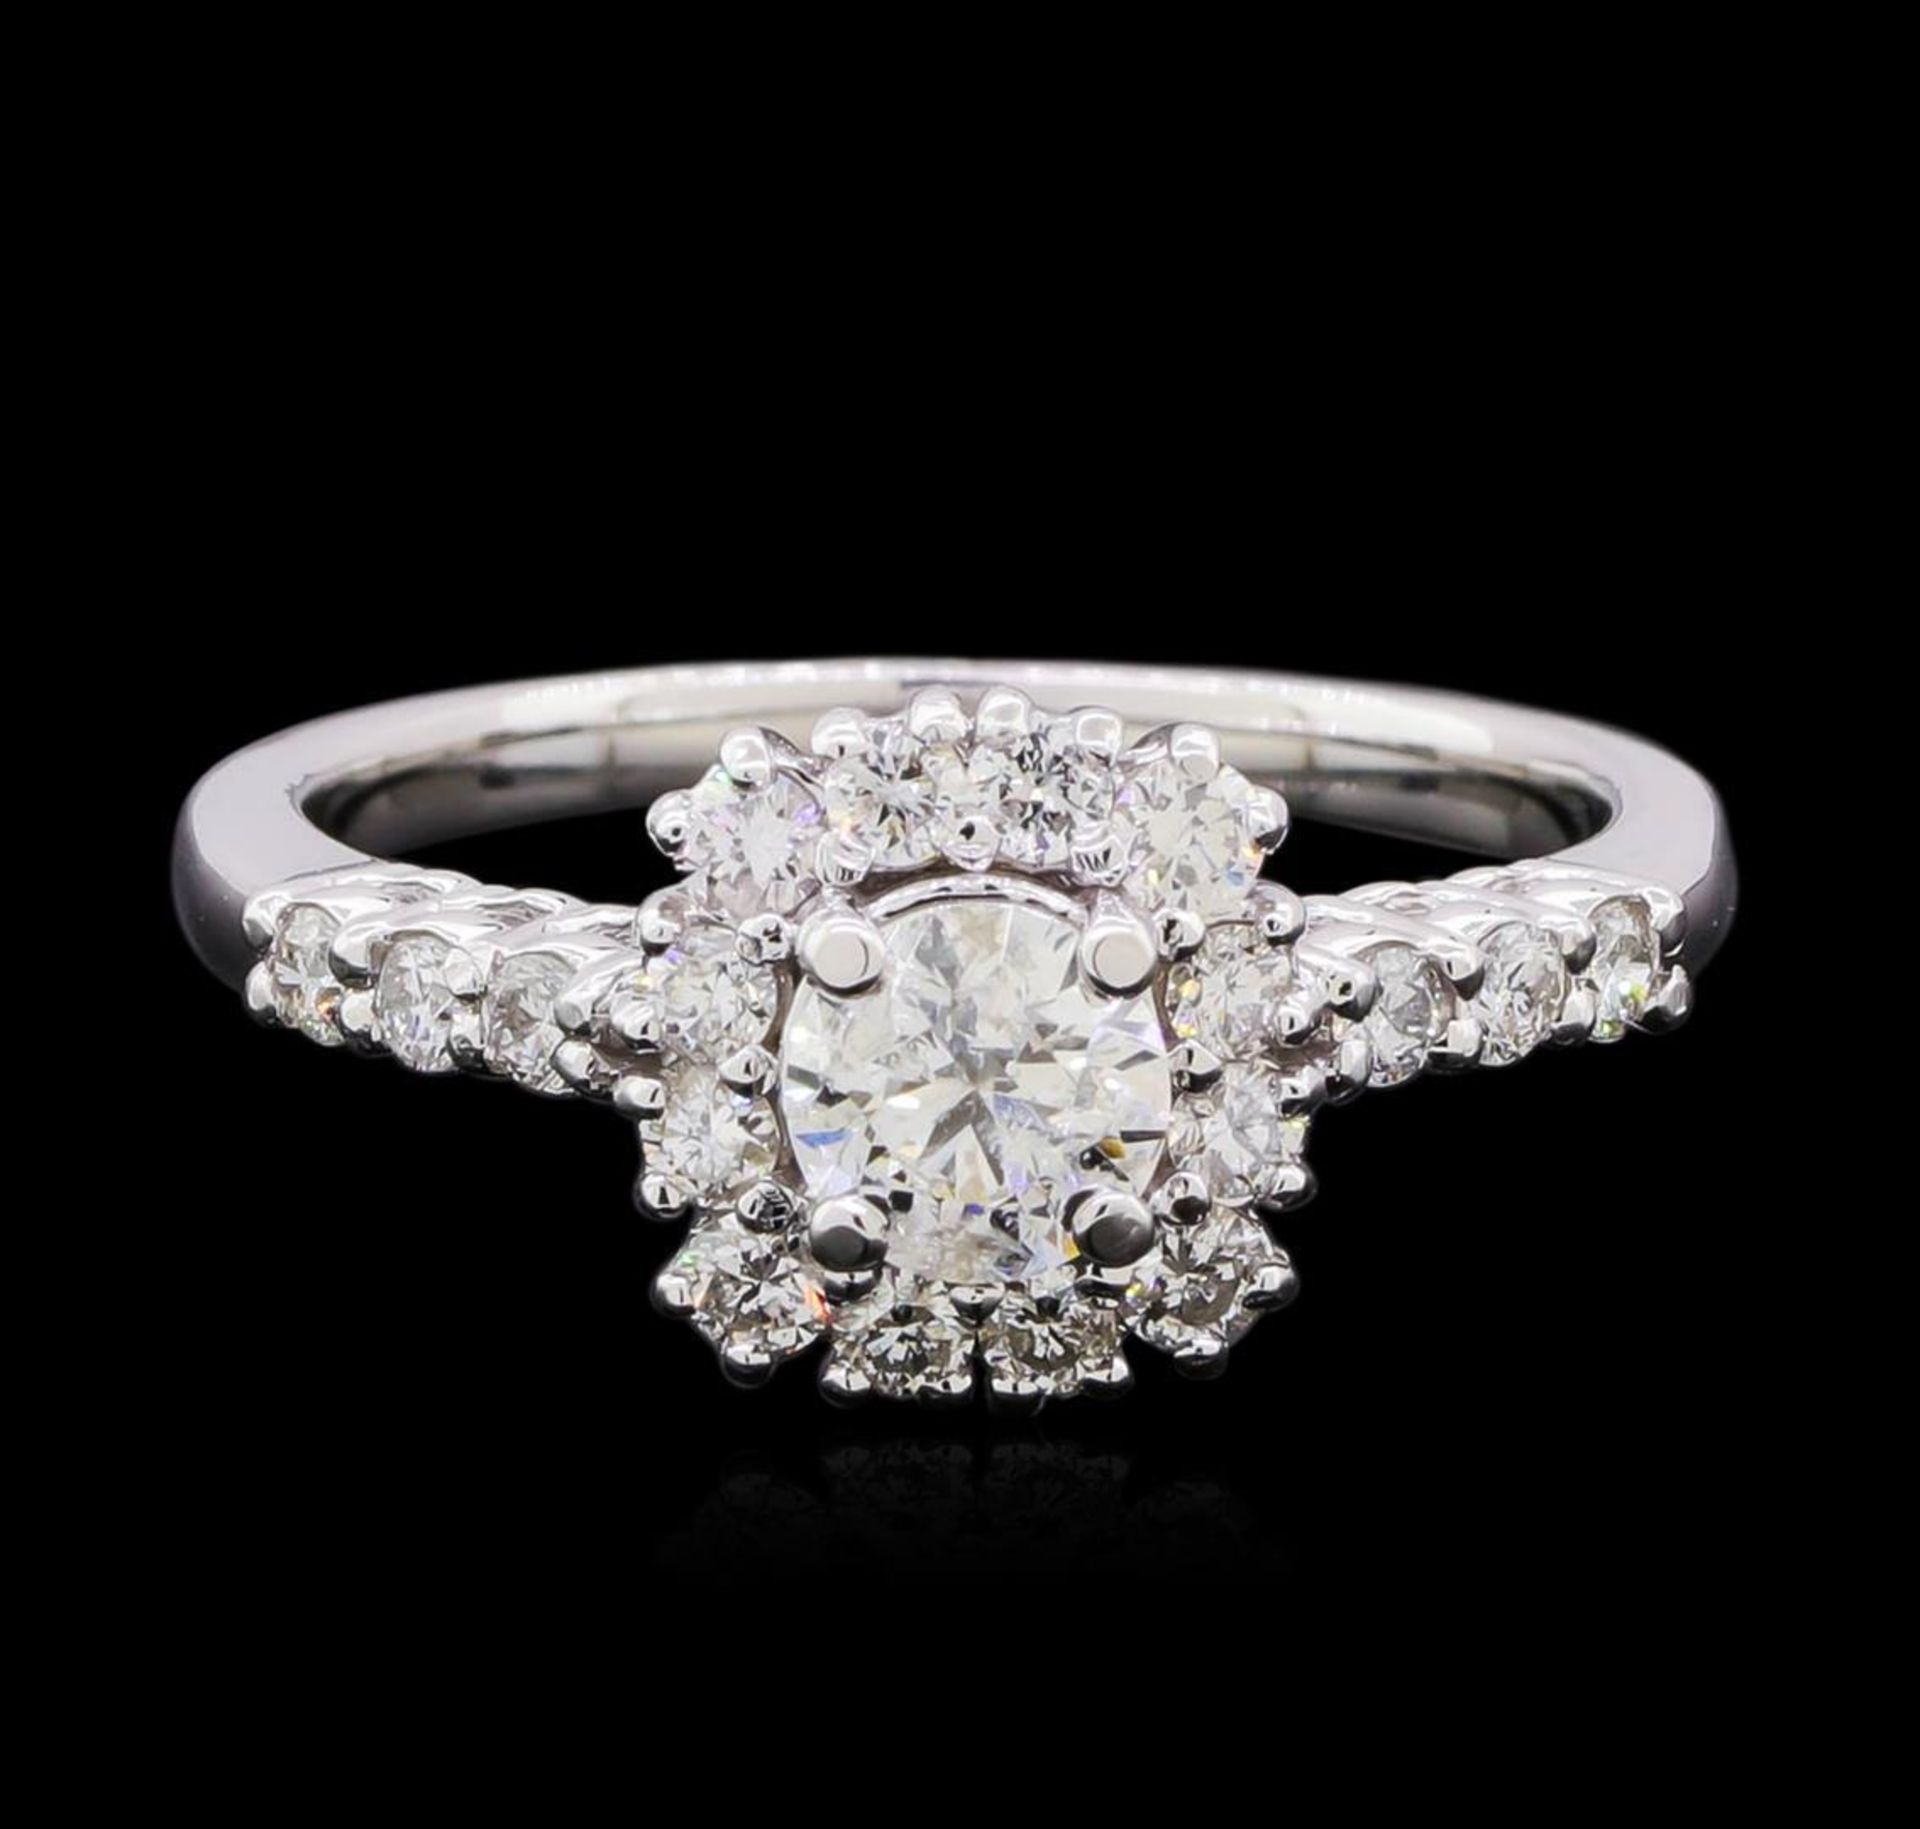 0.98ctw Diamond Ring - 14KT White Gold - Image 2 of 5